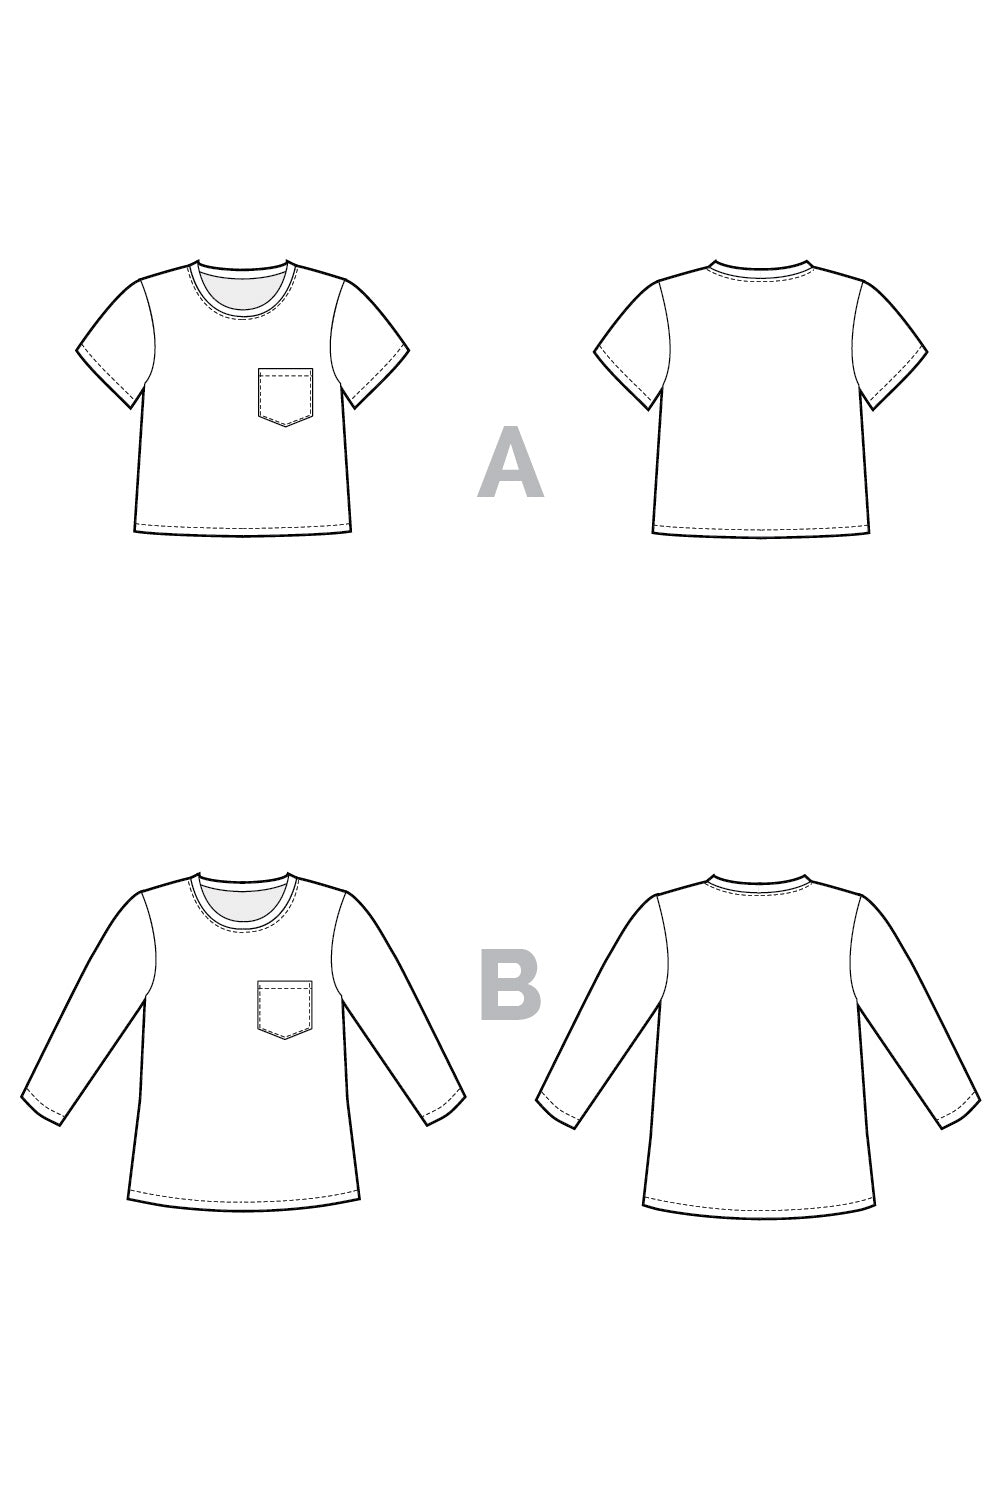 Core T-Shirt Pattern | Free T-Shirt Pattern - Crew Neck T-Shirt | available for free at Core Fabrics